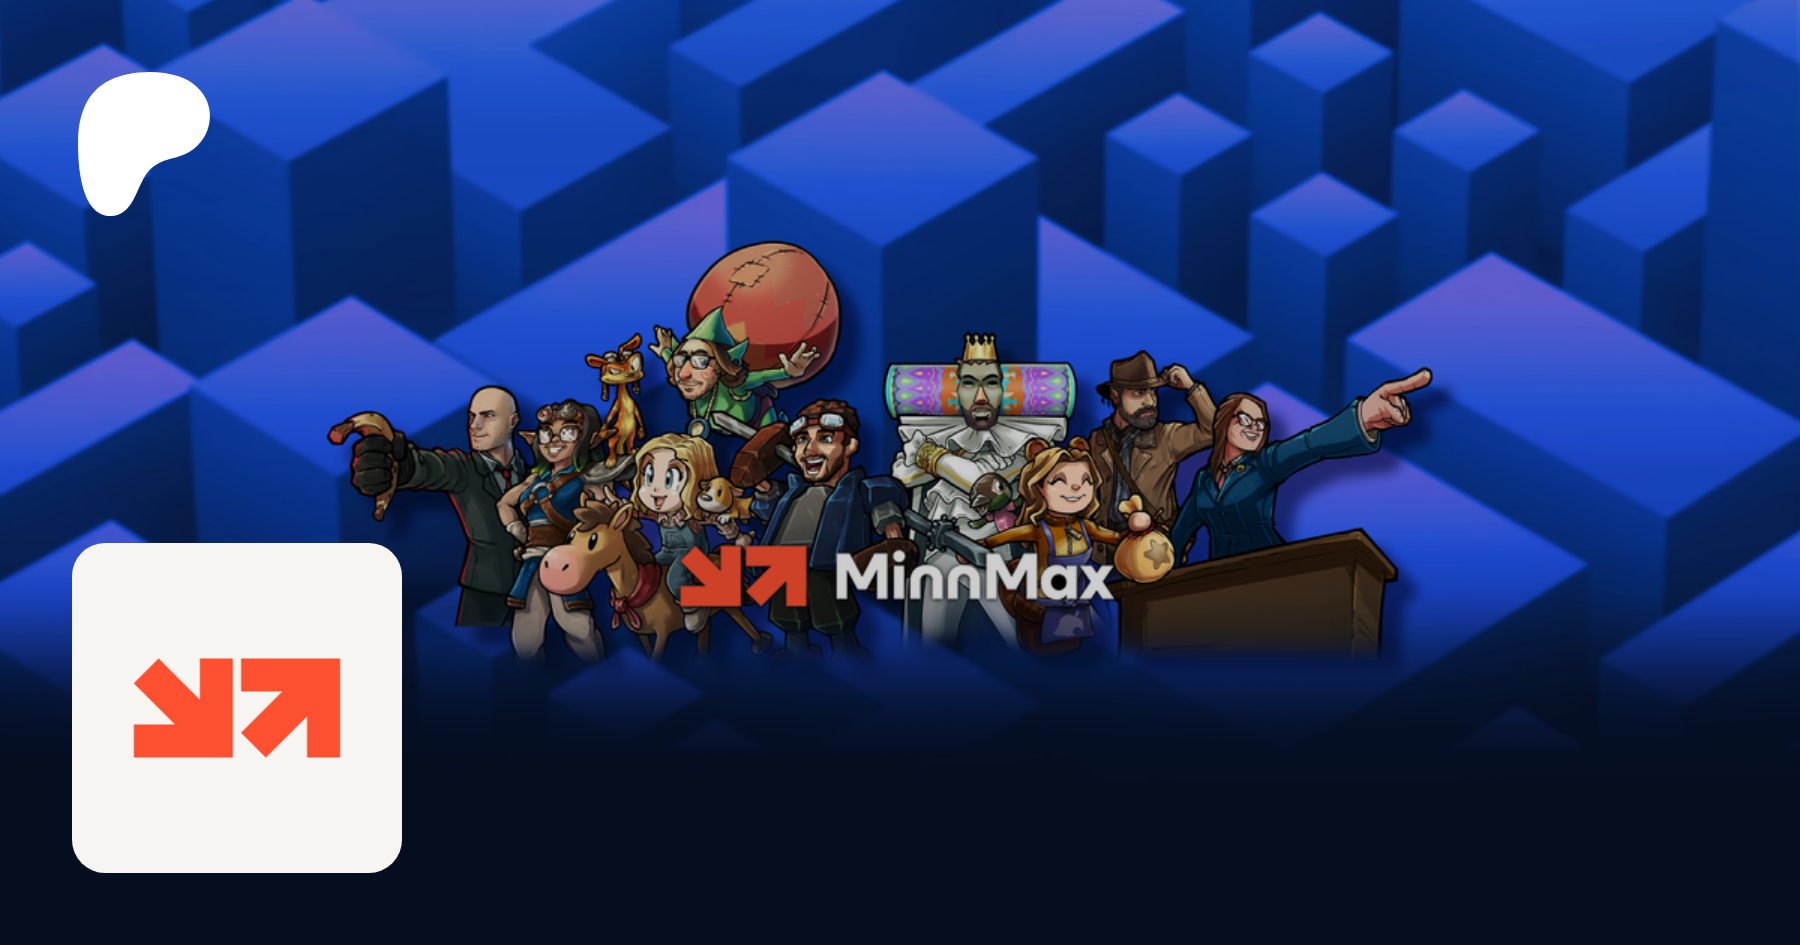 MinnMax | Creating game videos | Patreon